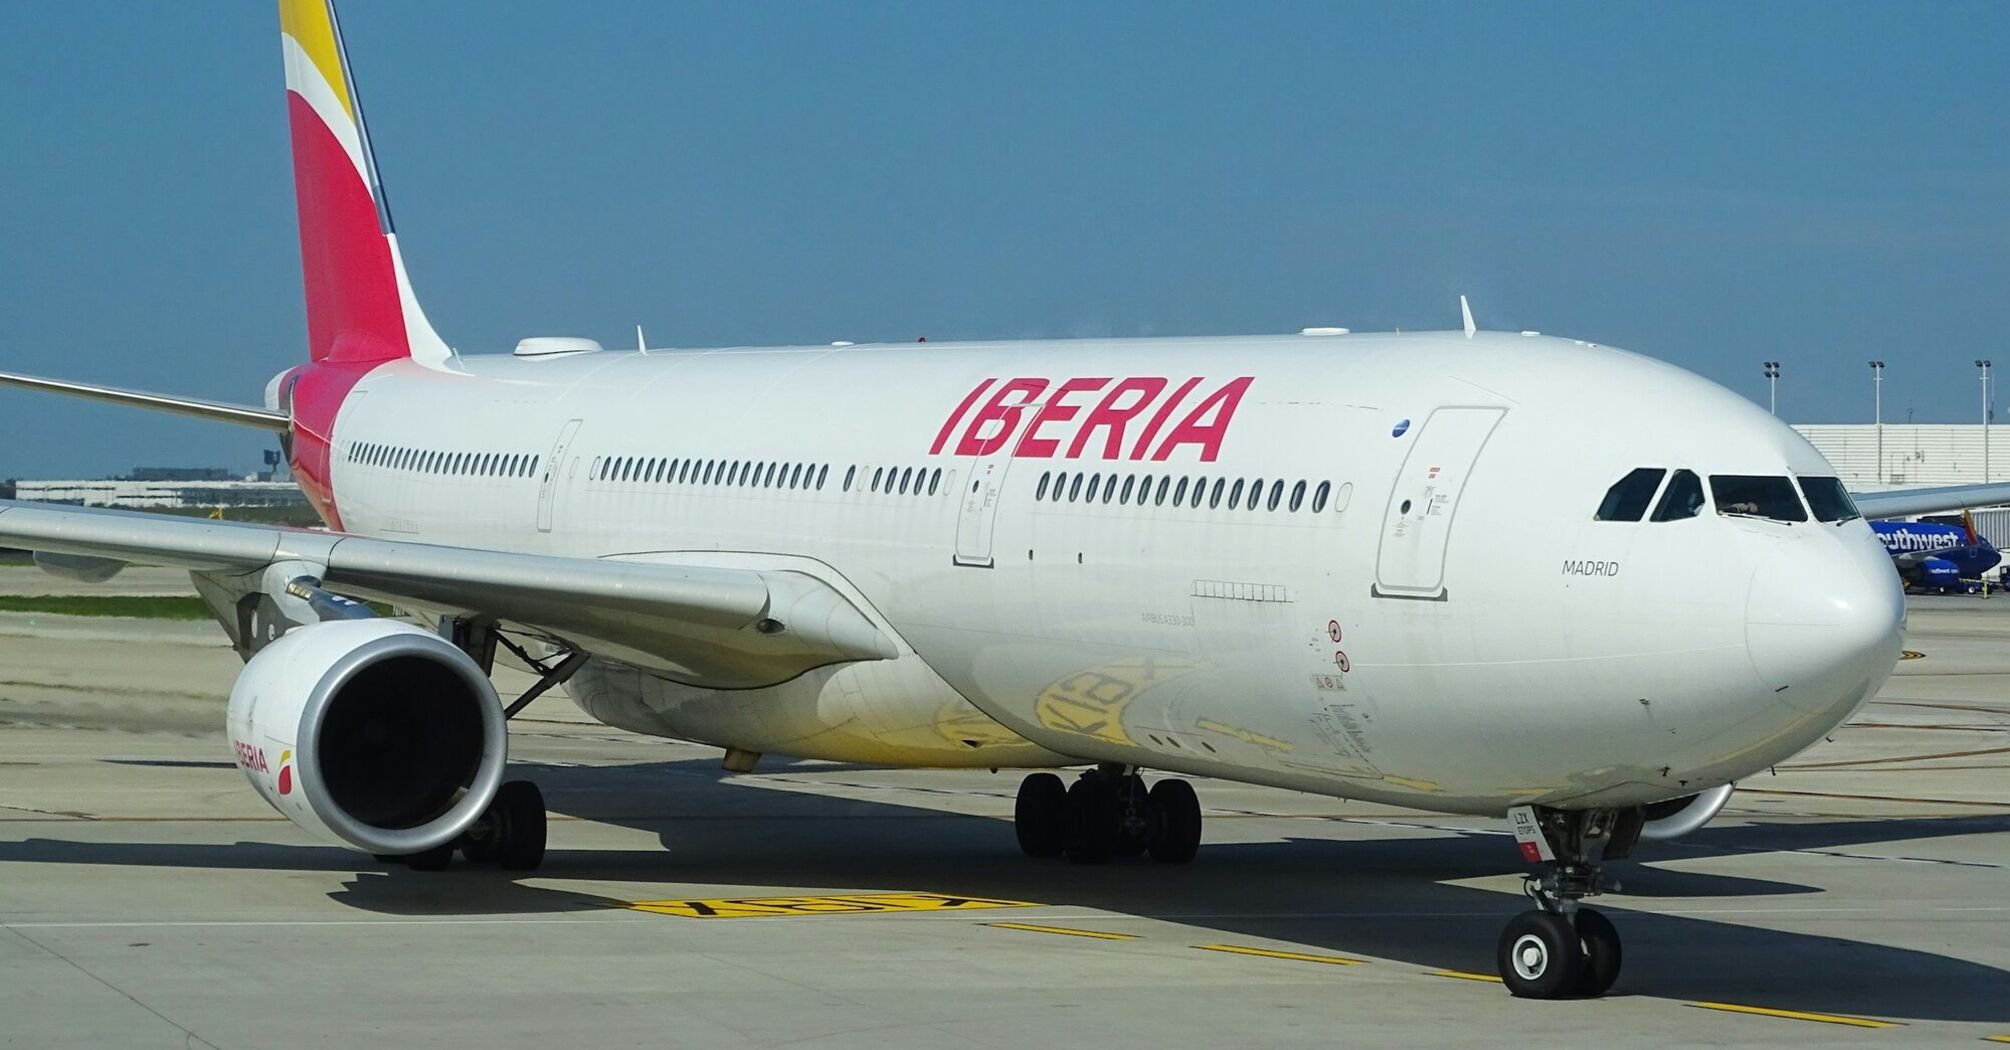 Iberia airplane on the tarmac